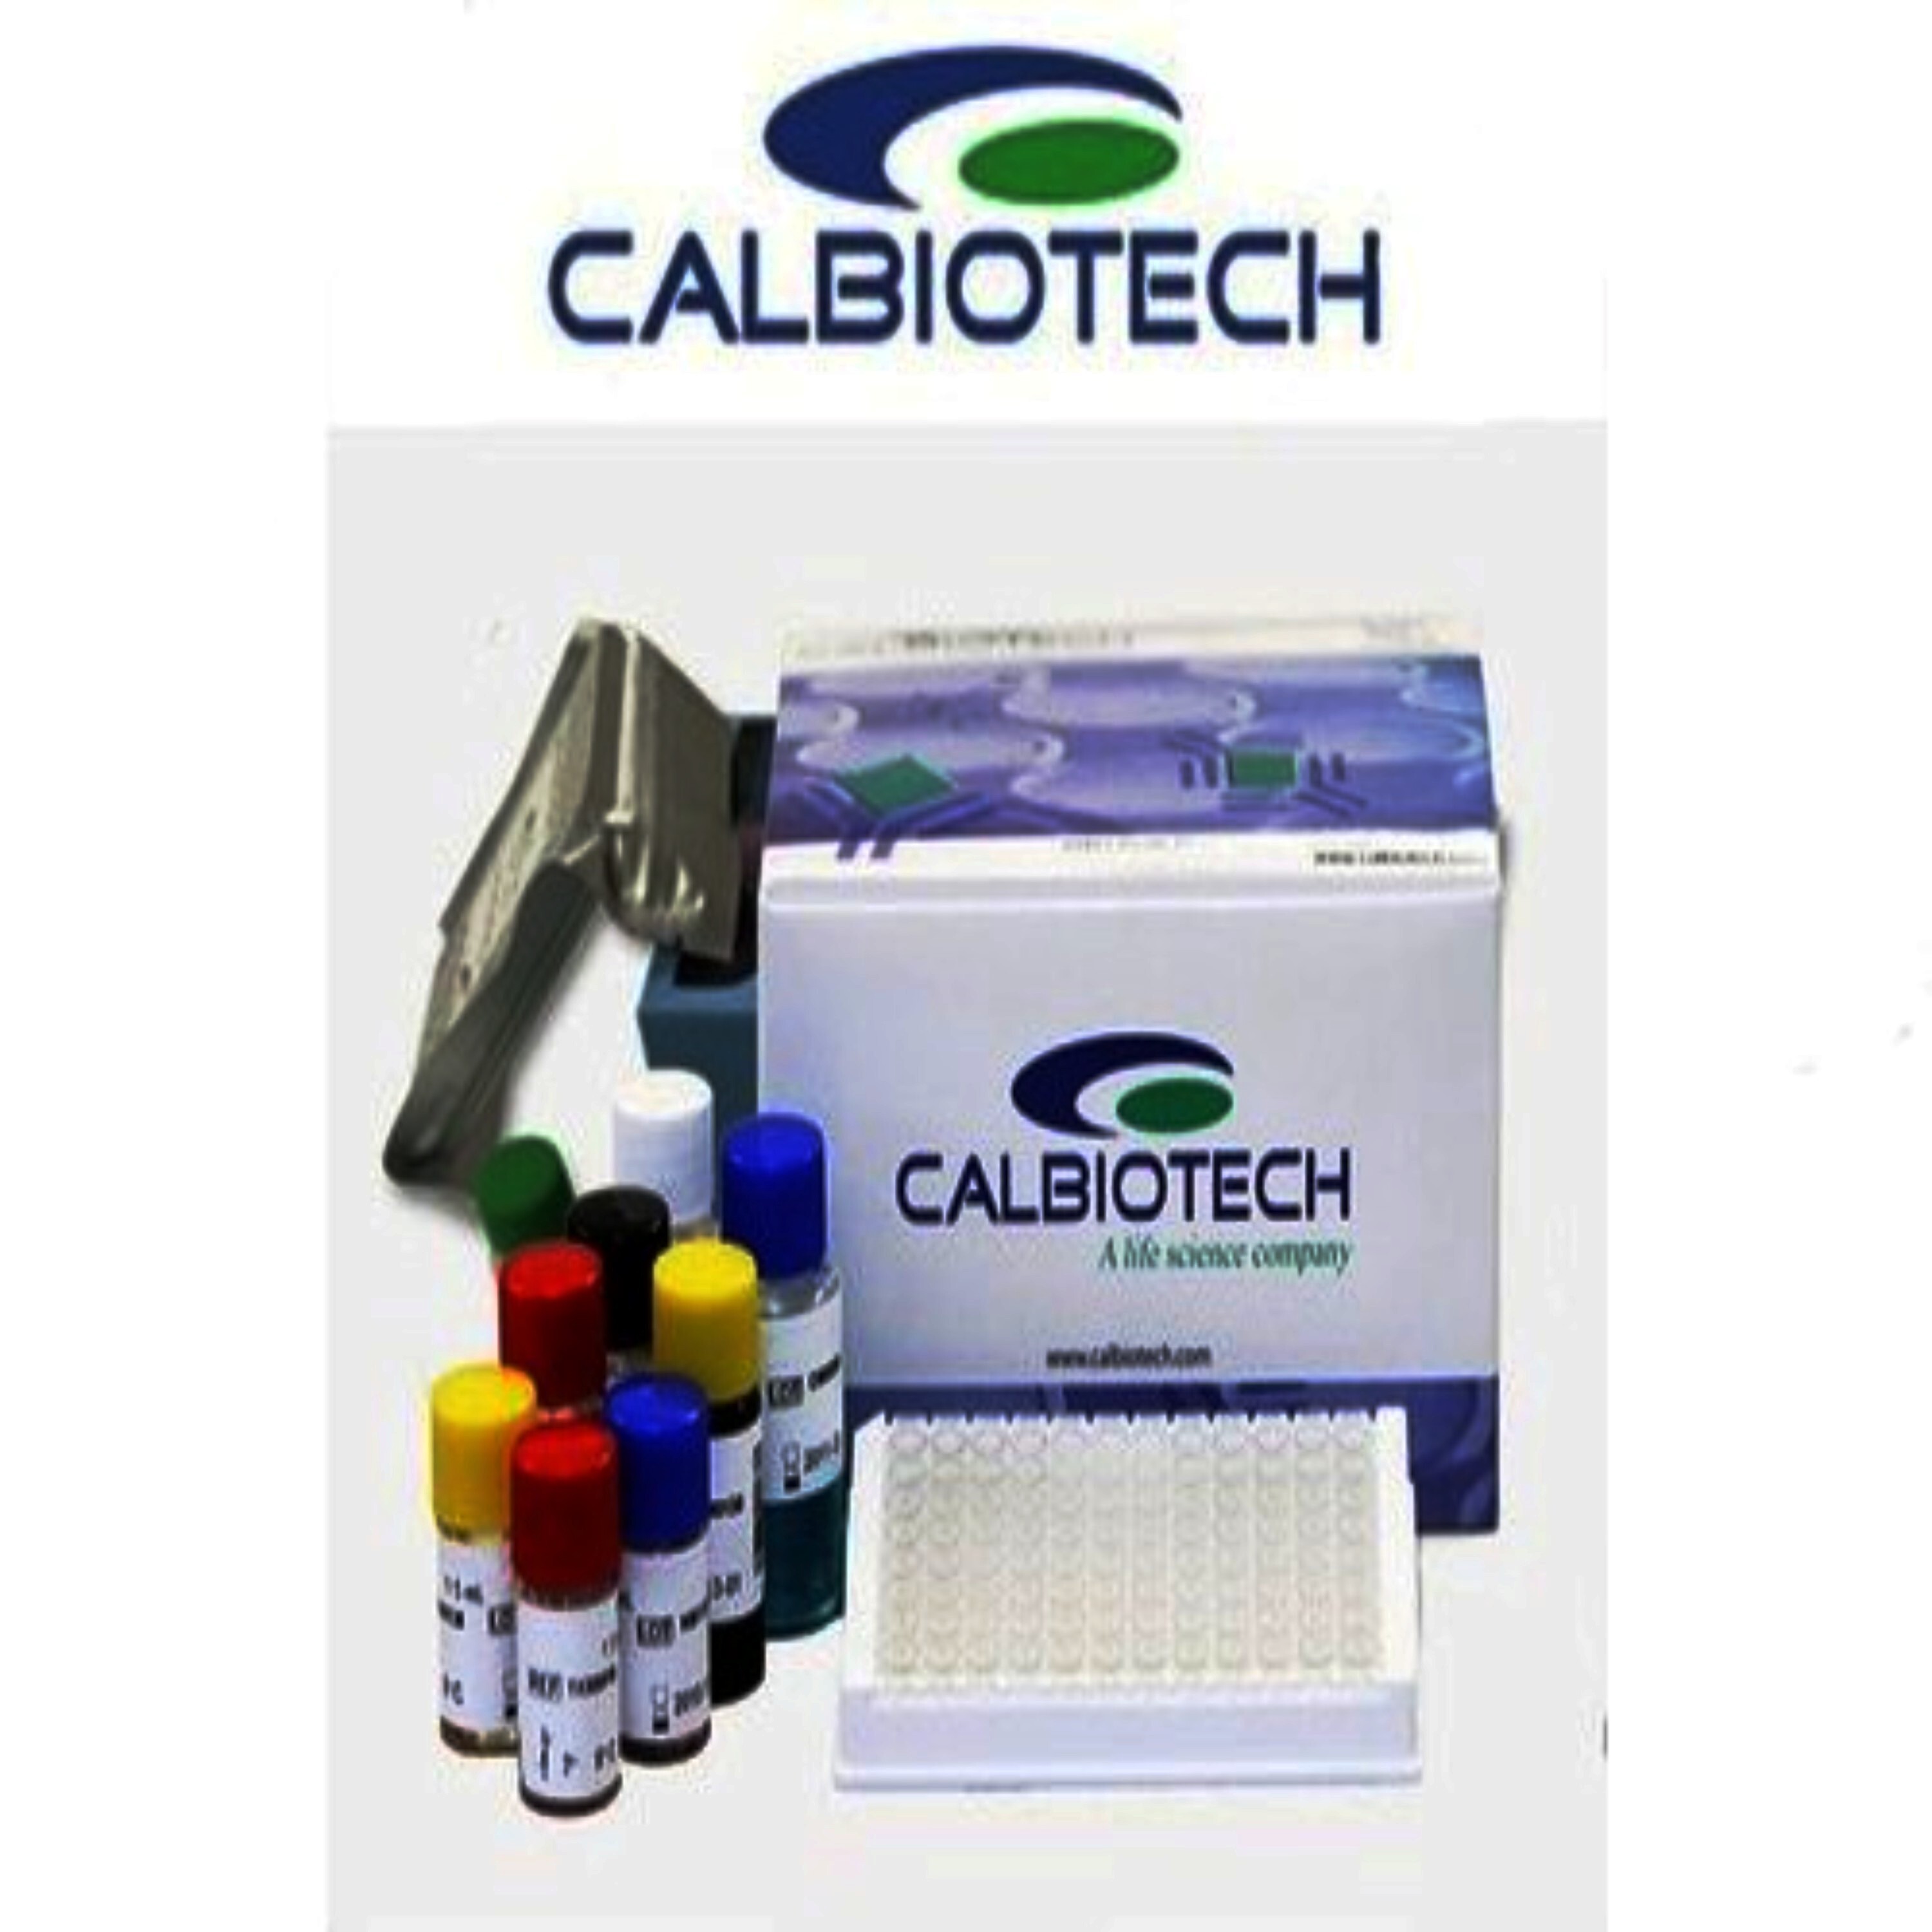 Calbiotech Cardiolipin IgA Elisa Kit